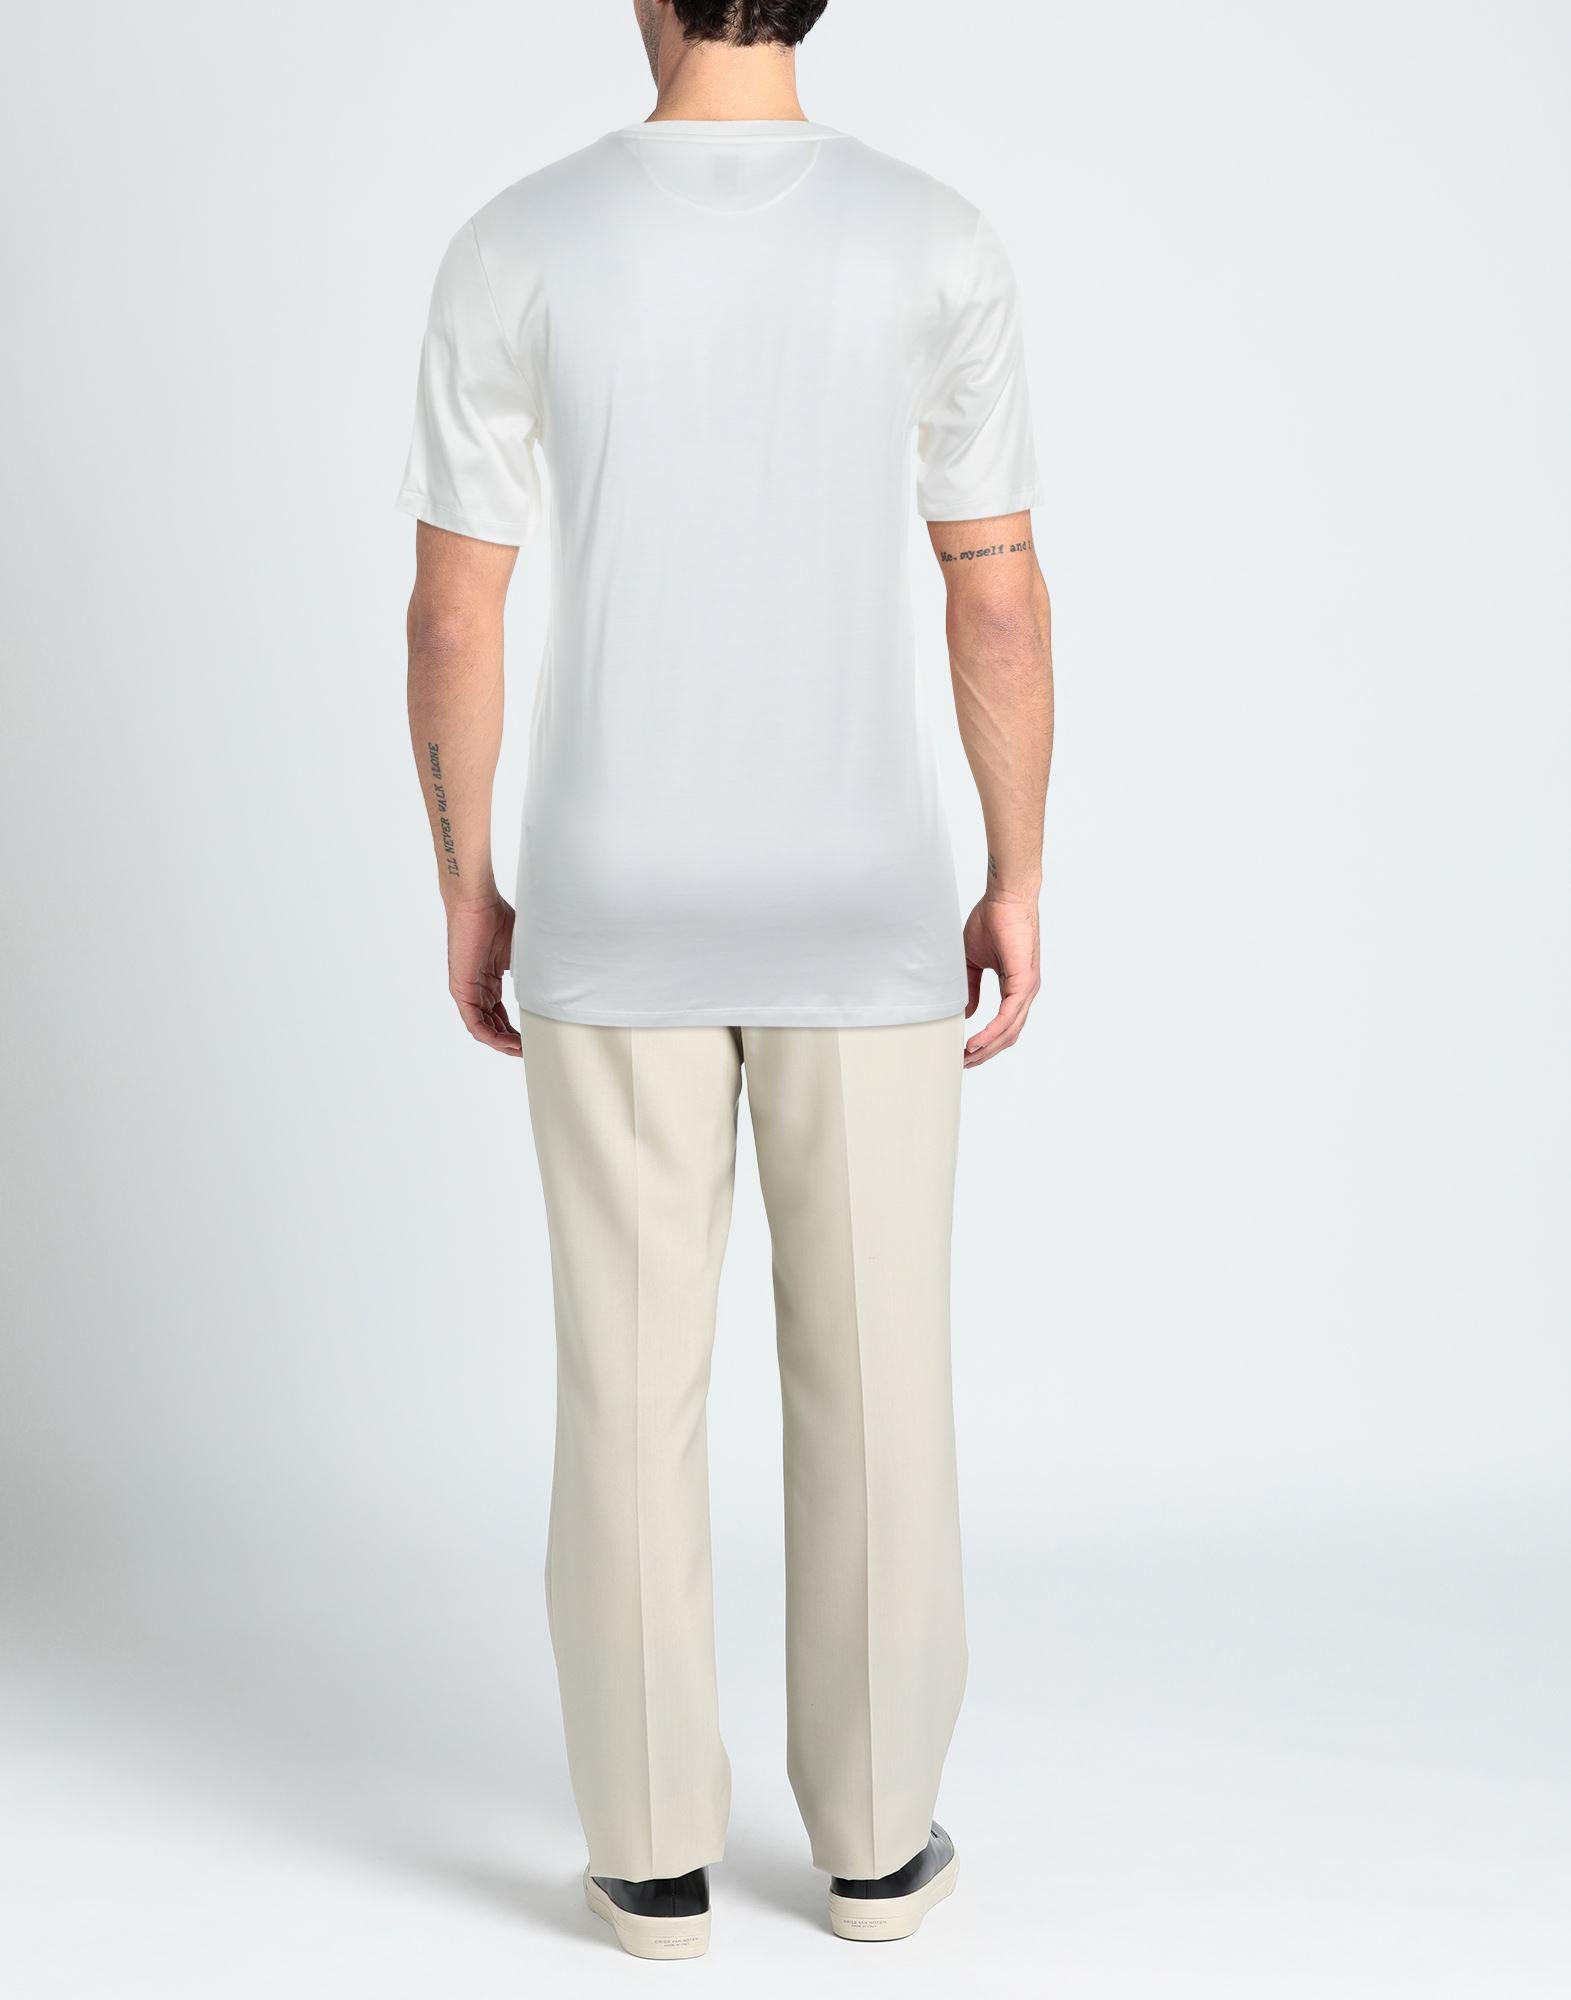 Paul Smith T-shirt in White for Men | Lyst